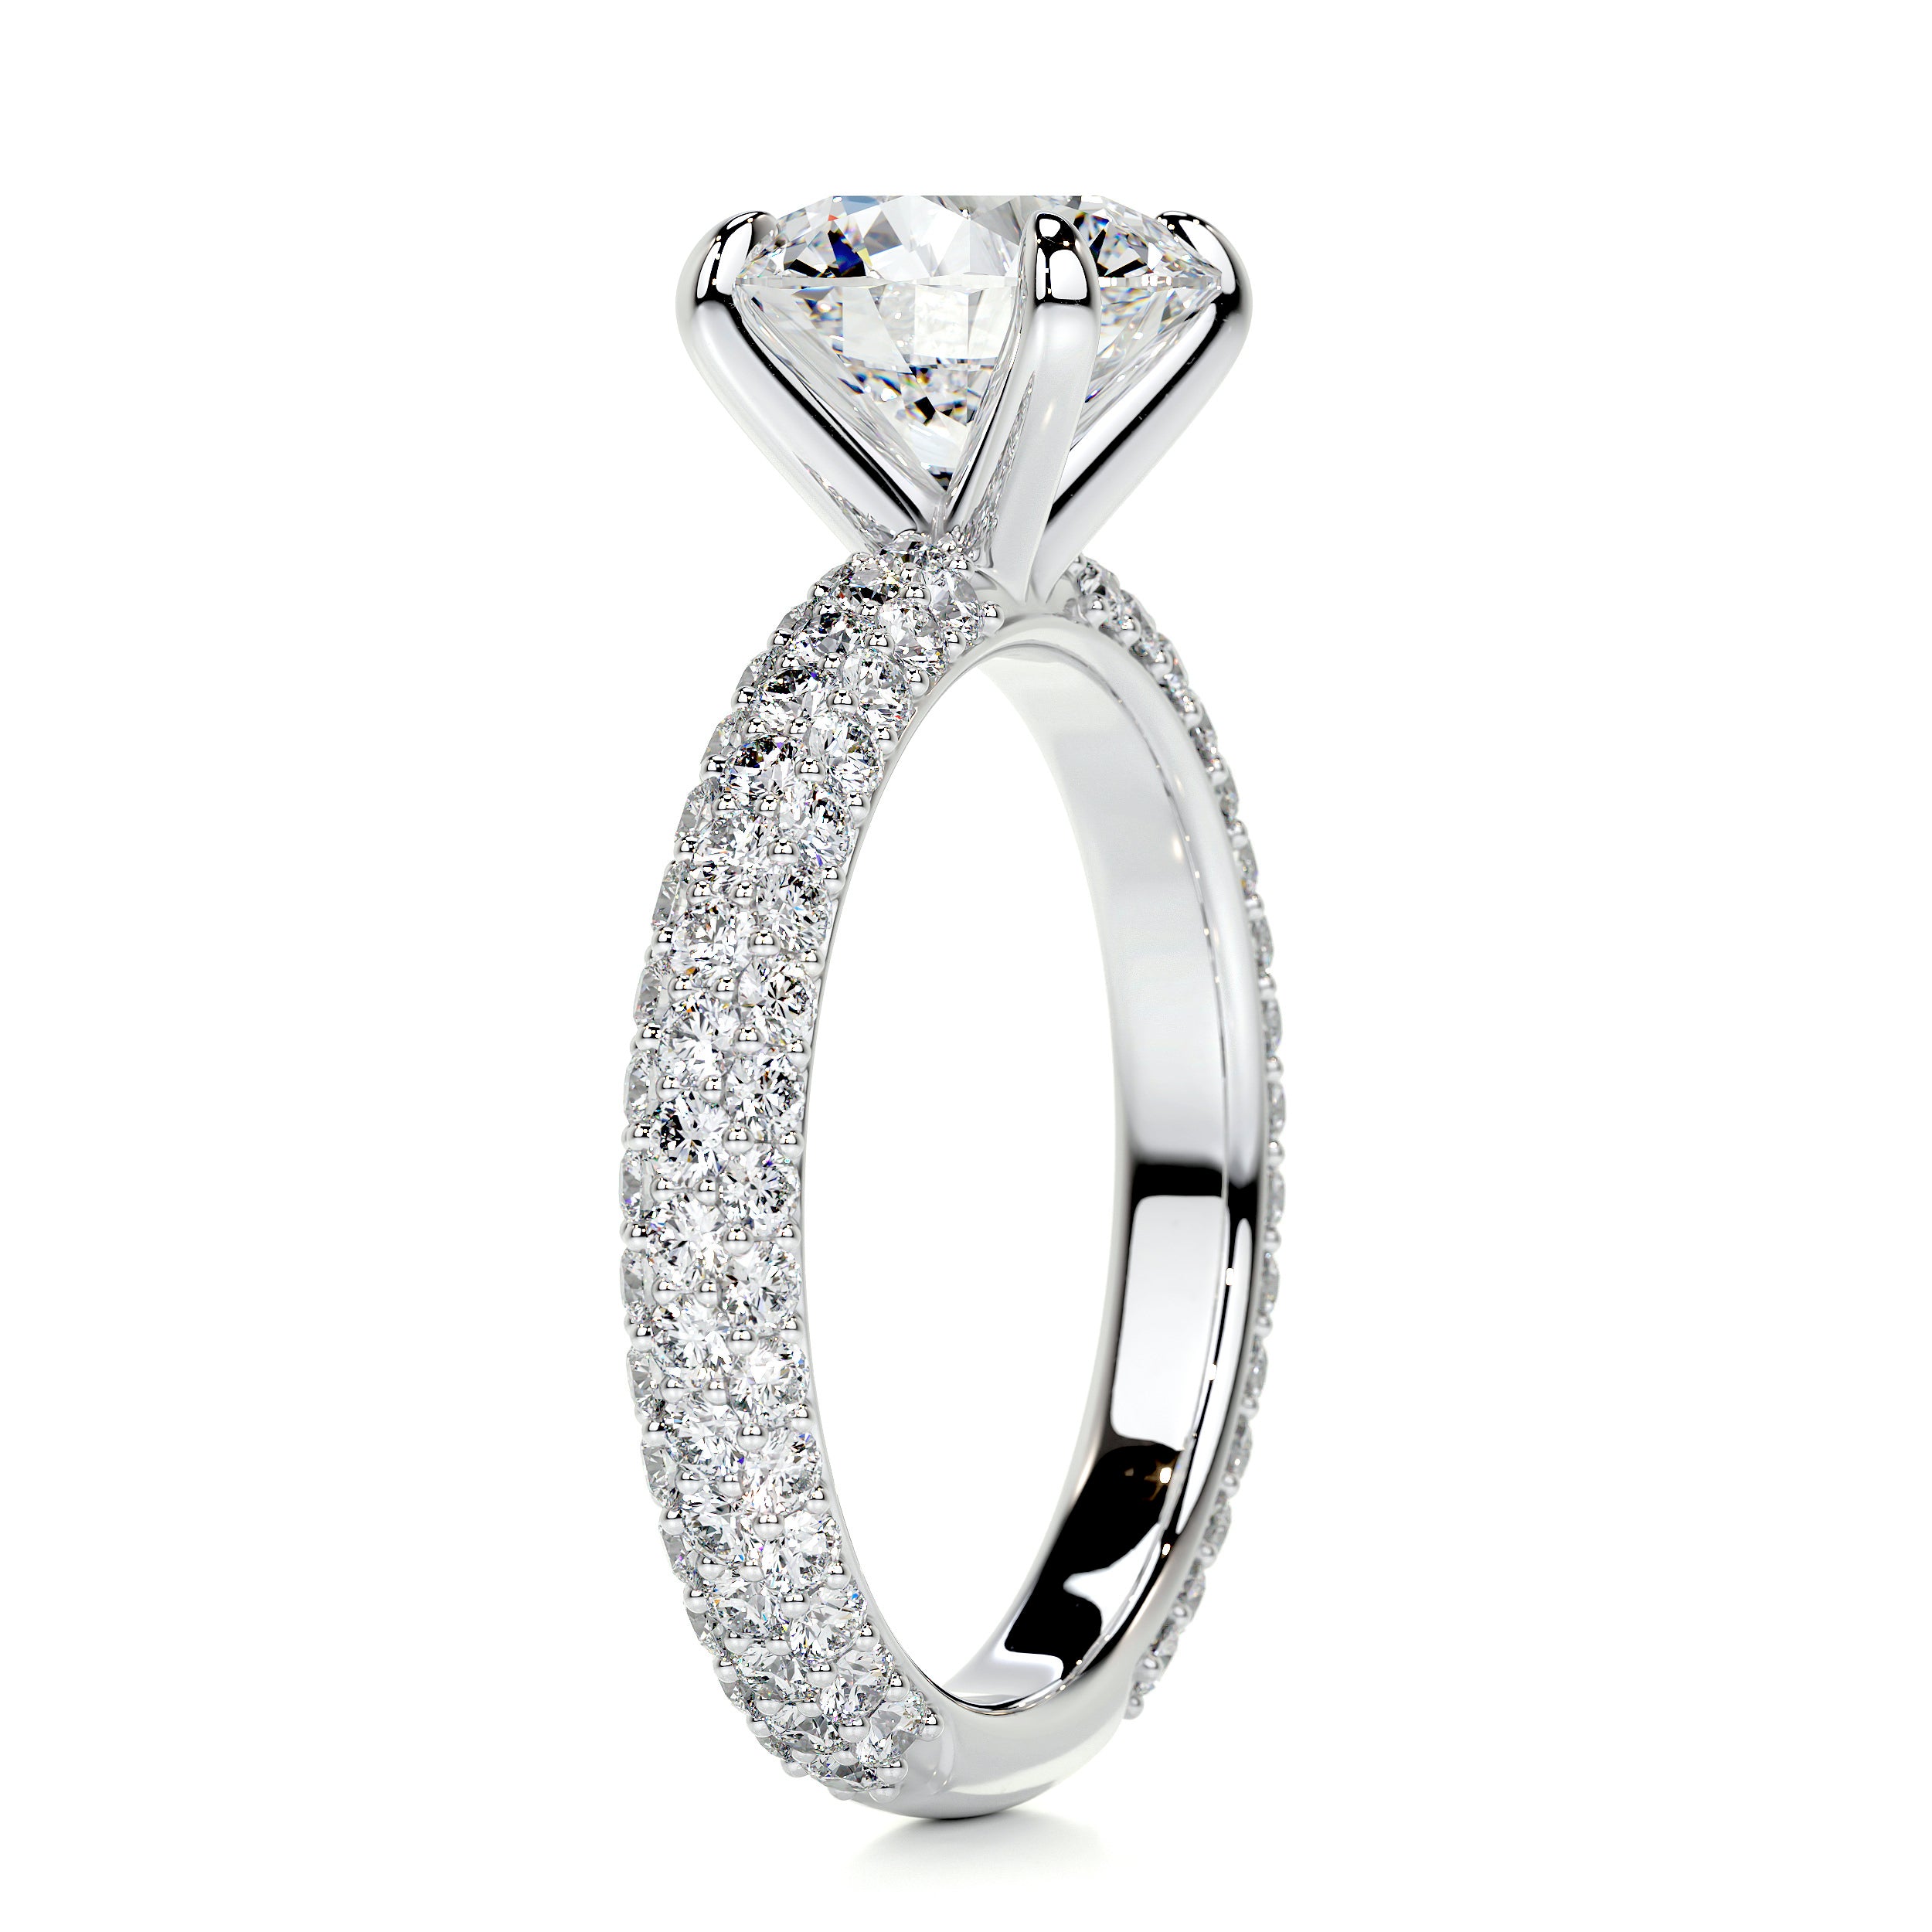 Charlotte Diamond Engagement Ring   (2.5 Carat) -18K White Gold